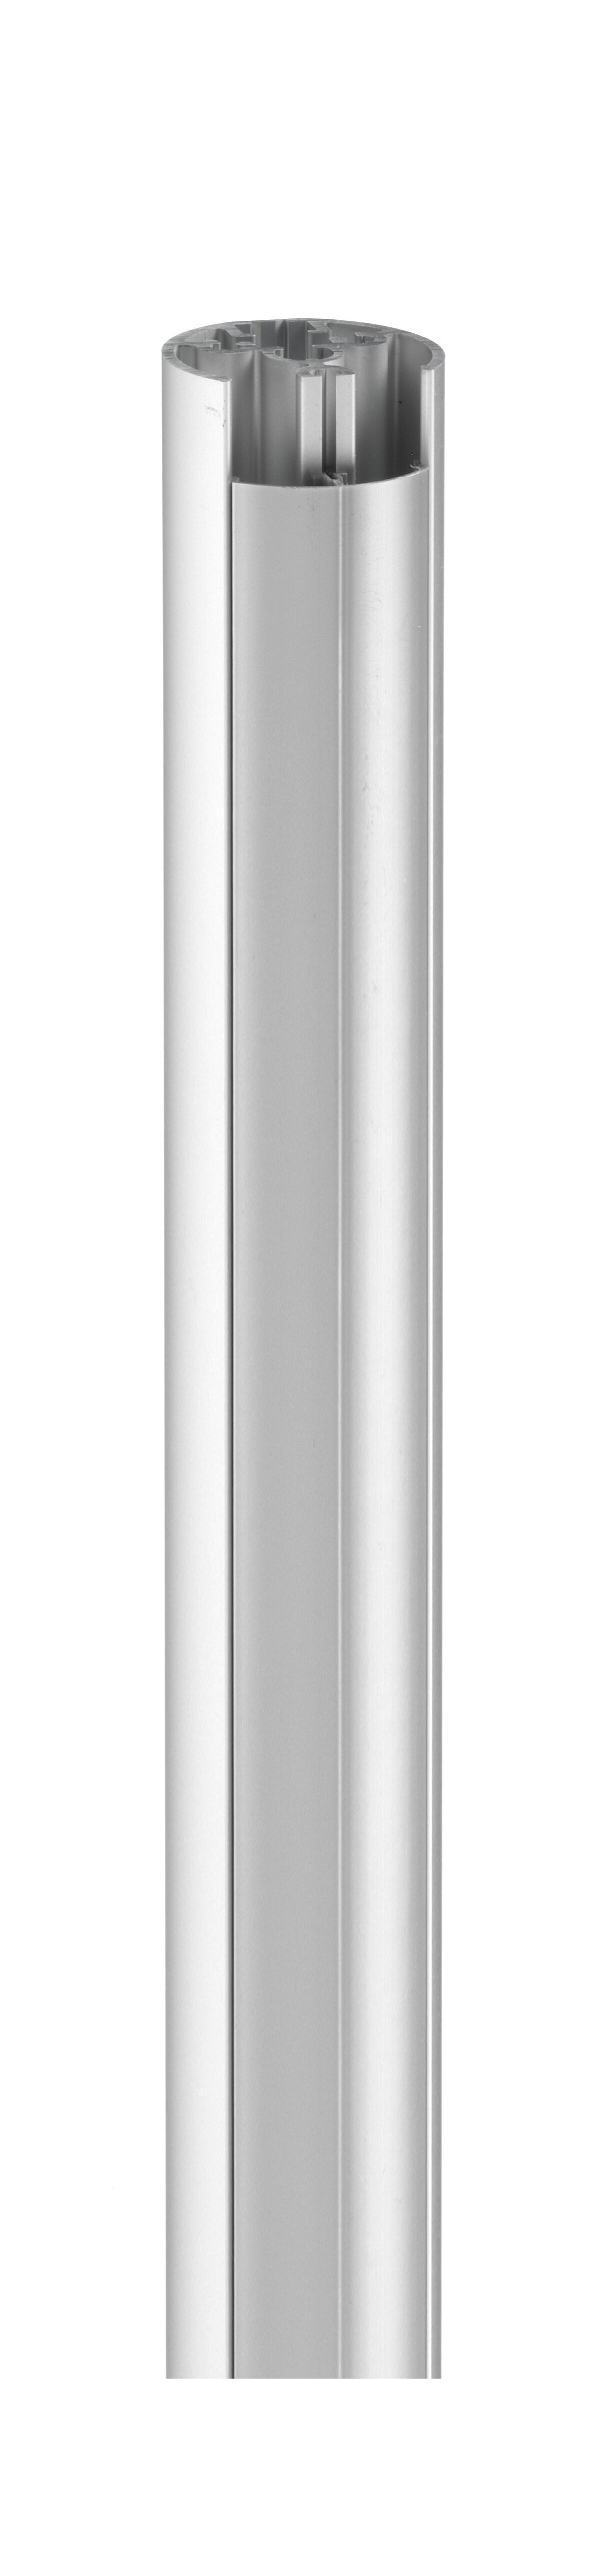 Vogel's PUC 2108 Tube 80 cm - Product